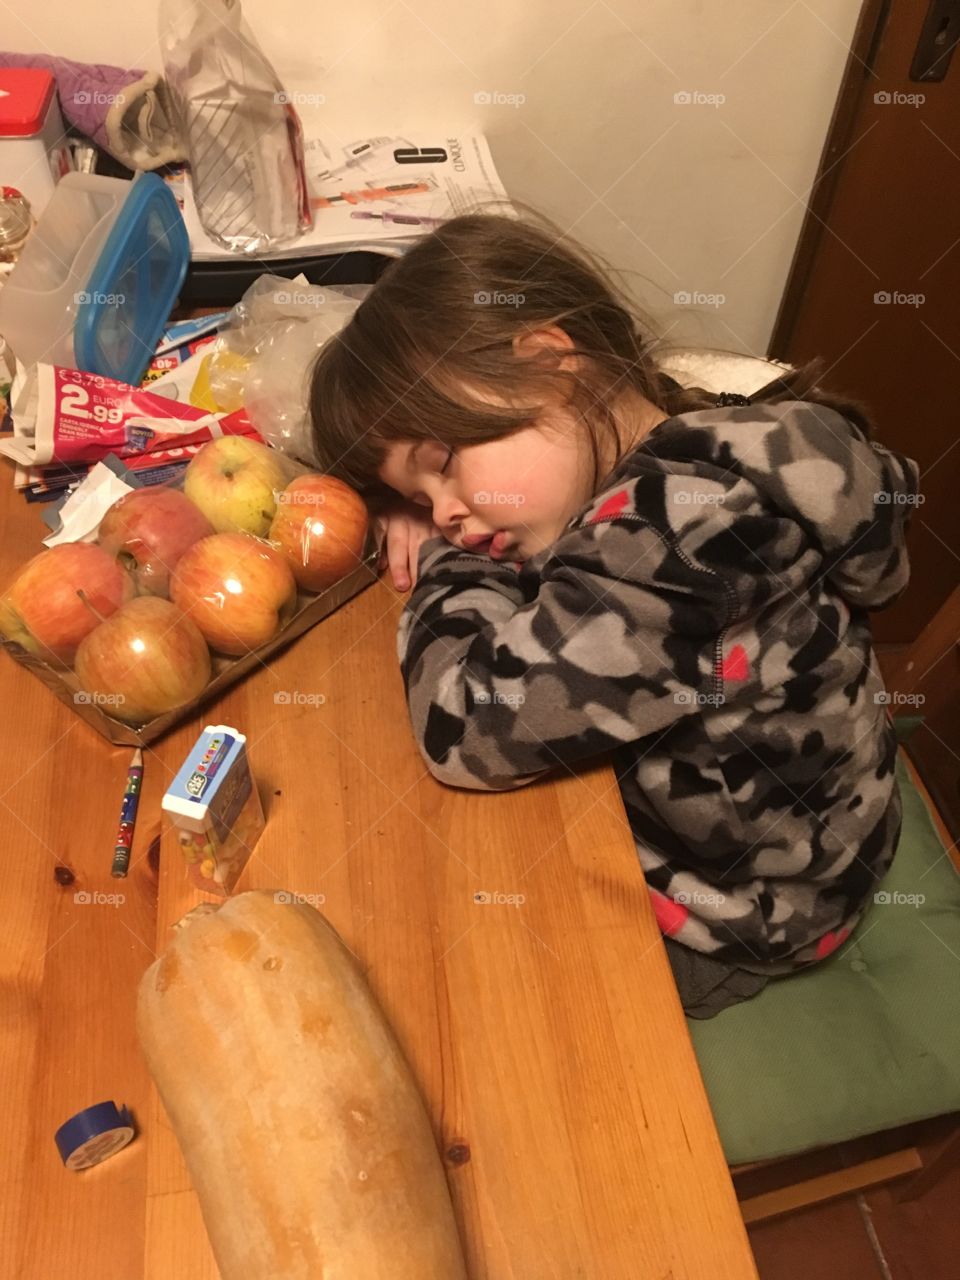 Girl baby sleeping table apples dream dreams seeet dreams asleep sudden toddler daughter 